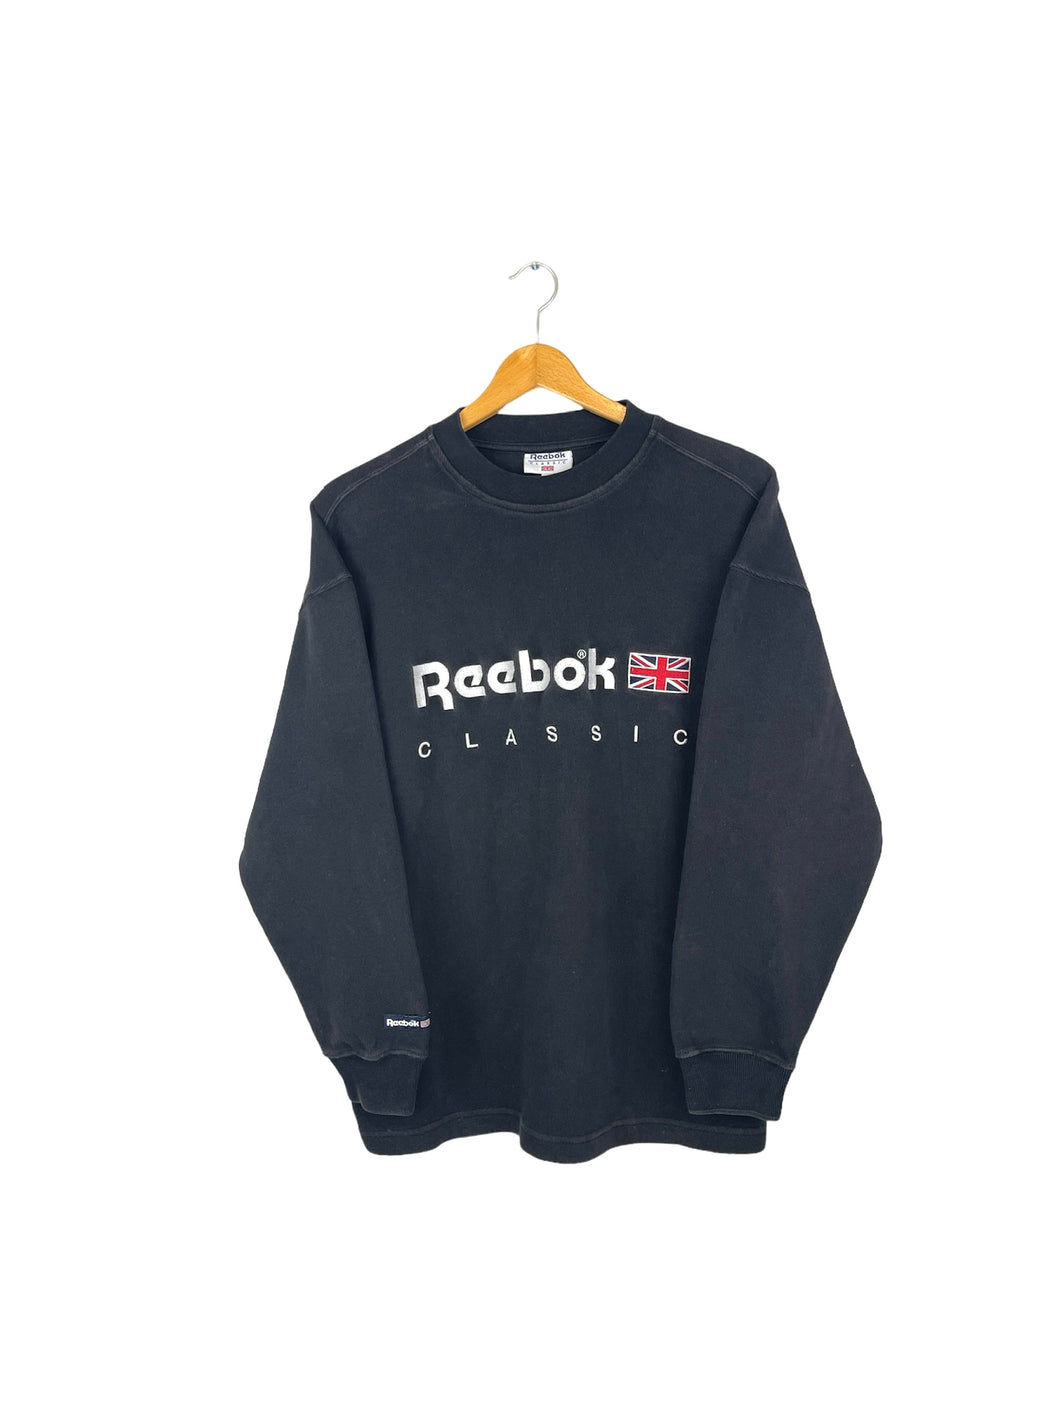 Reebok Sweatshirt - Small